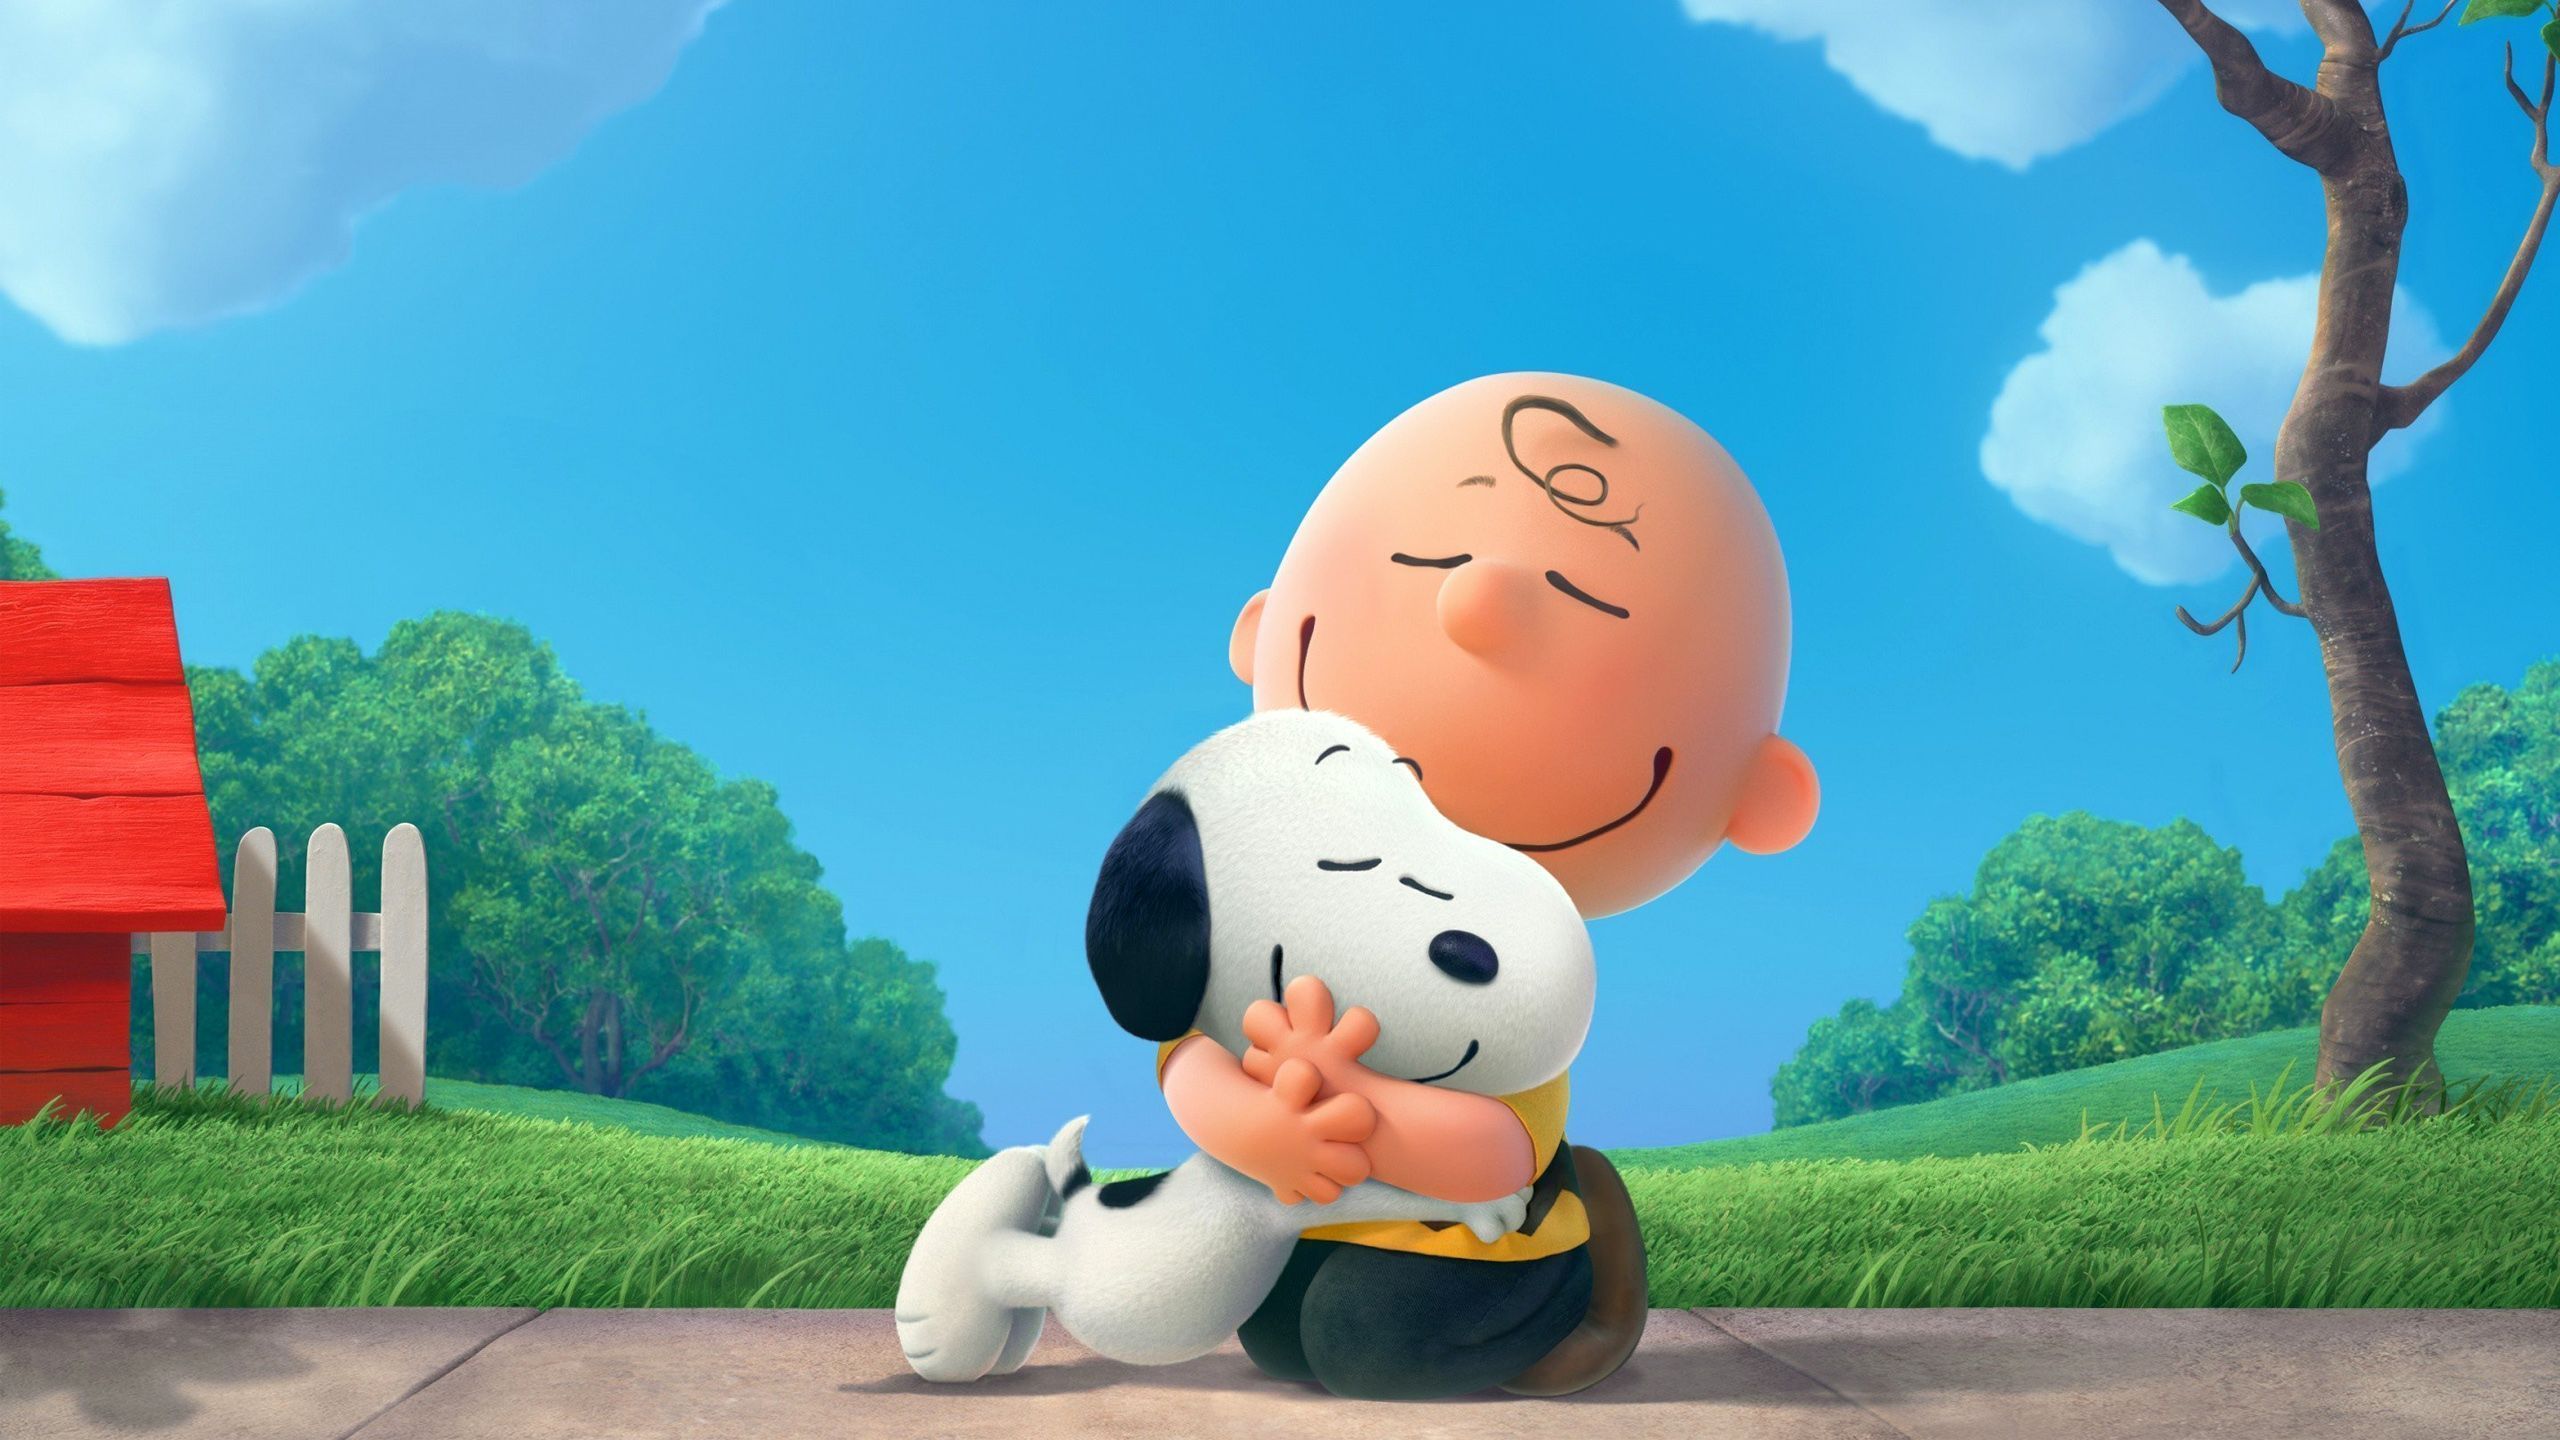 Charlie Brown and Snoopy hugging in the peanuts movie - Charlie Brown